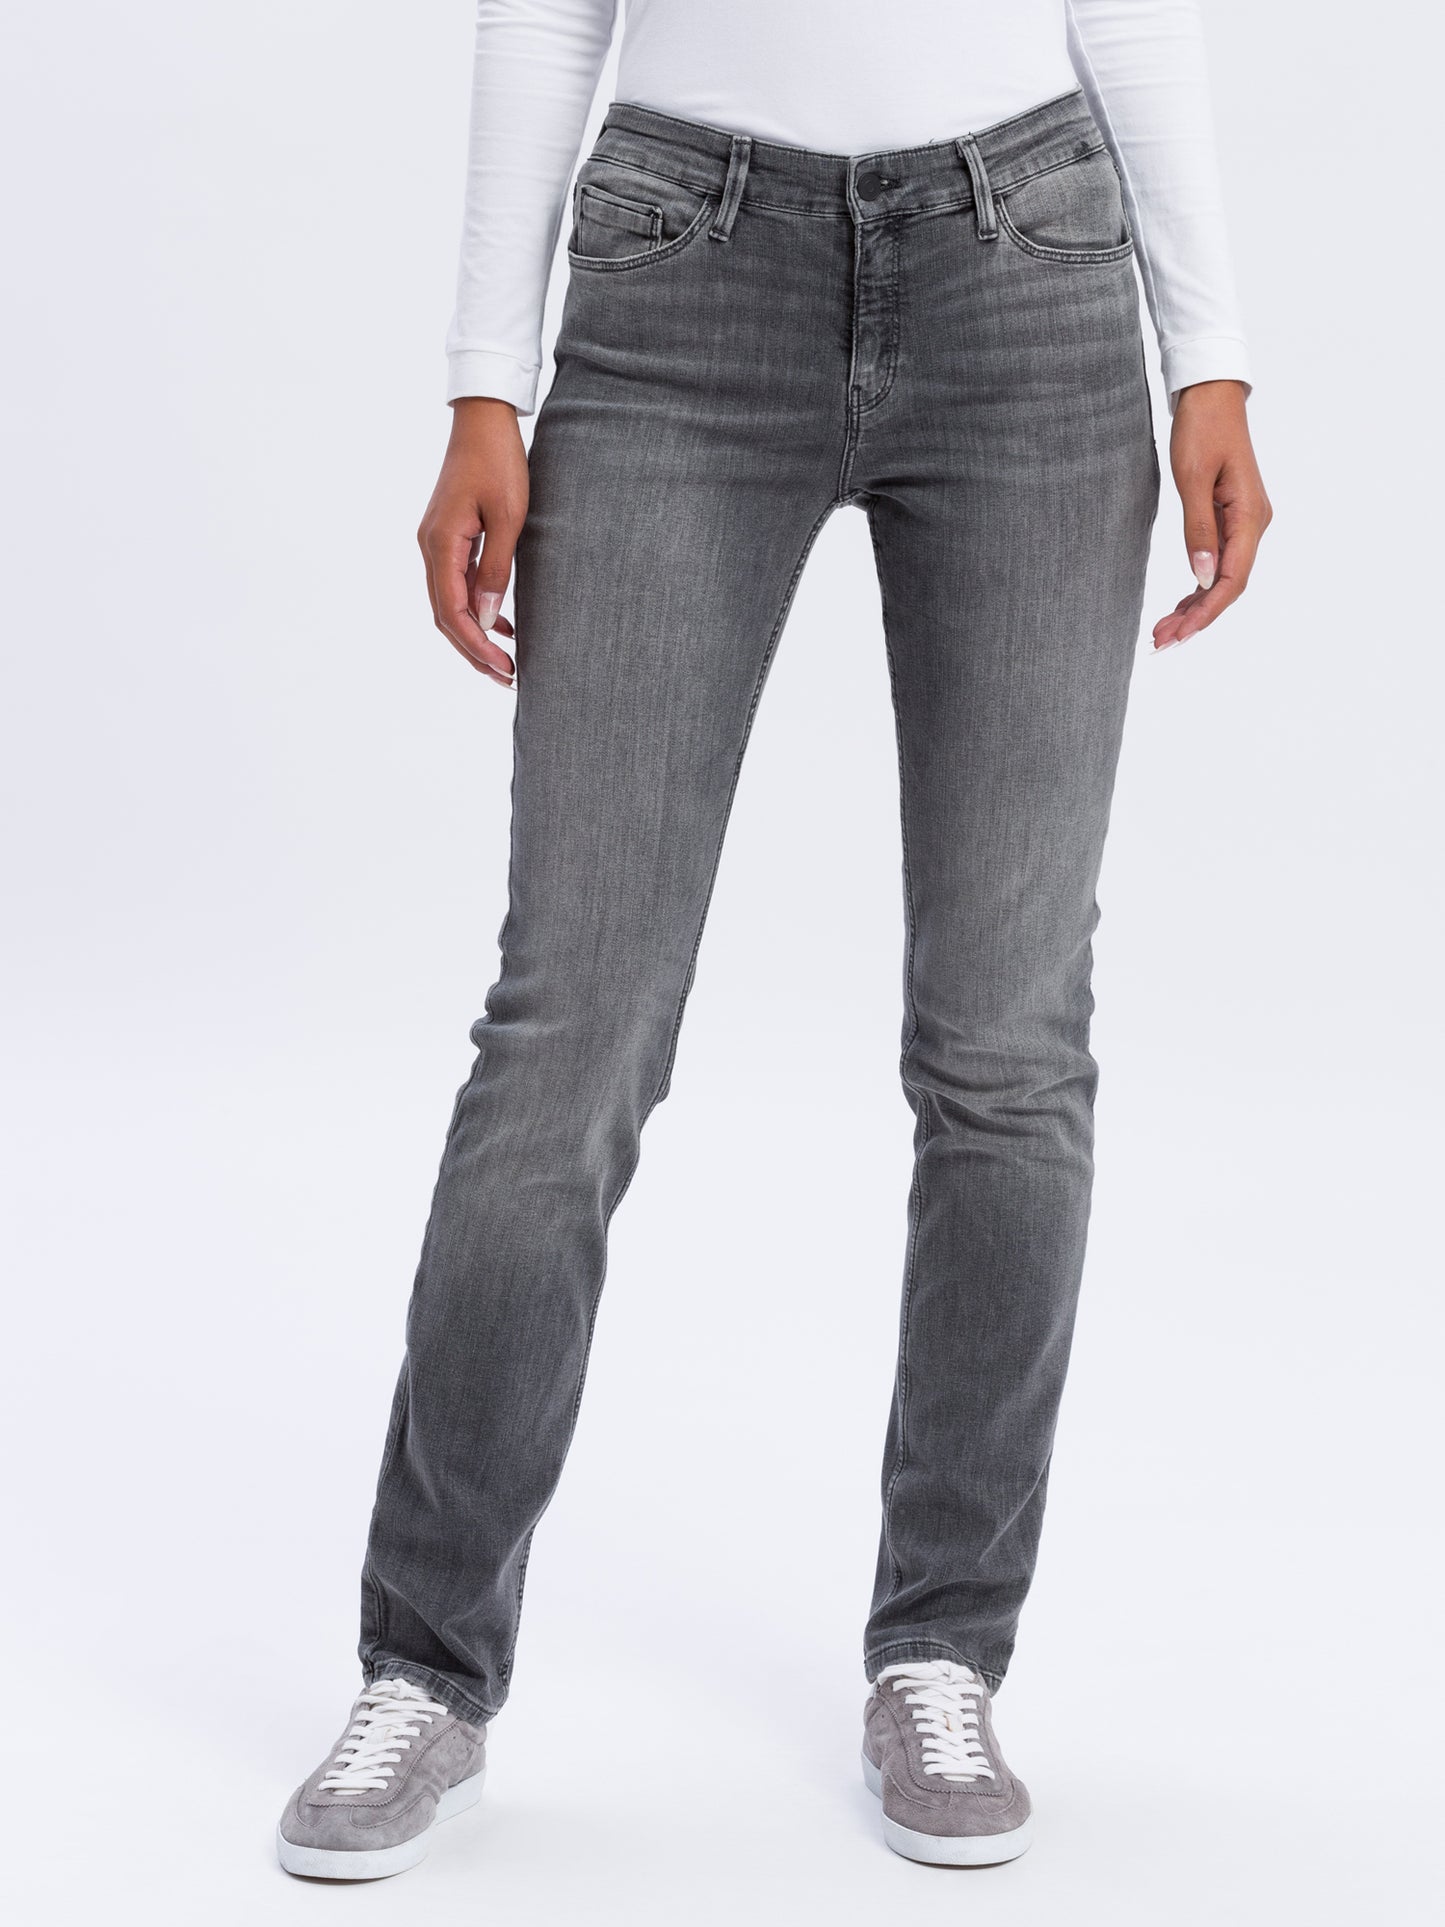 Anya women's jeans slim fit high waist dark grey